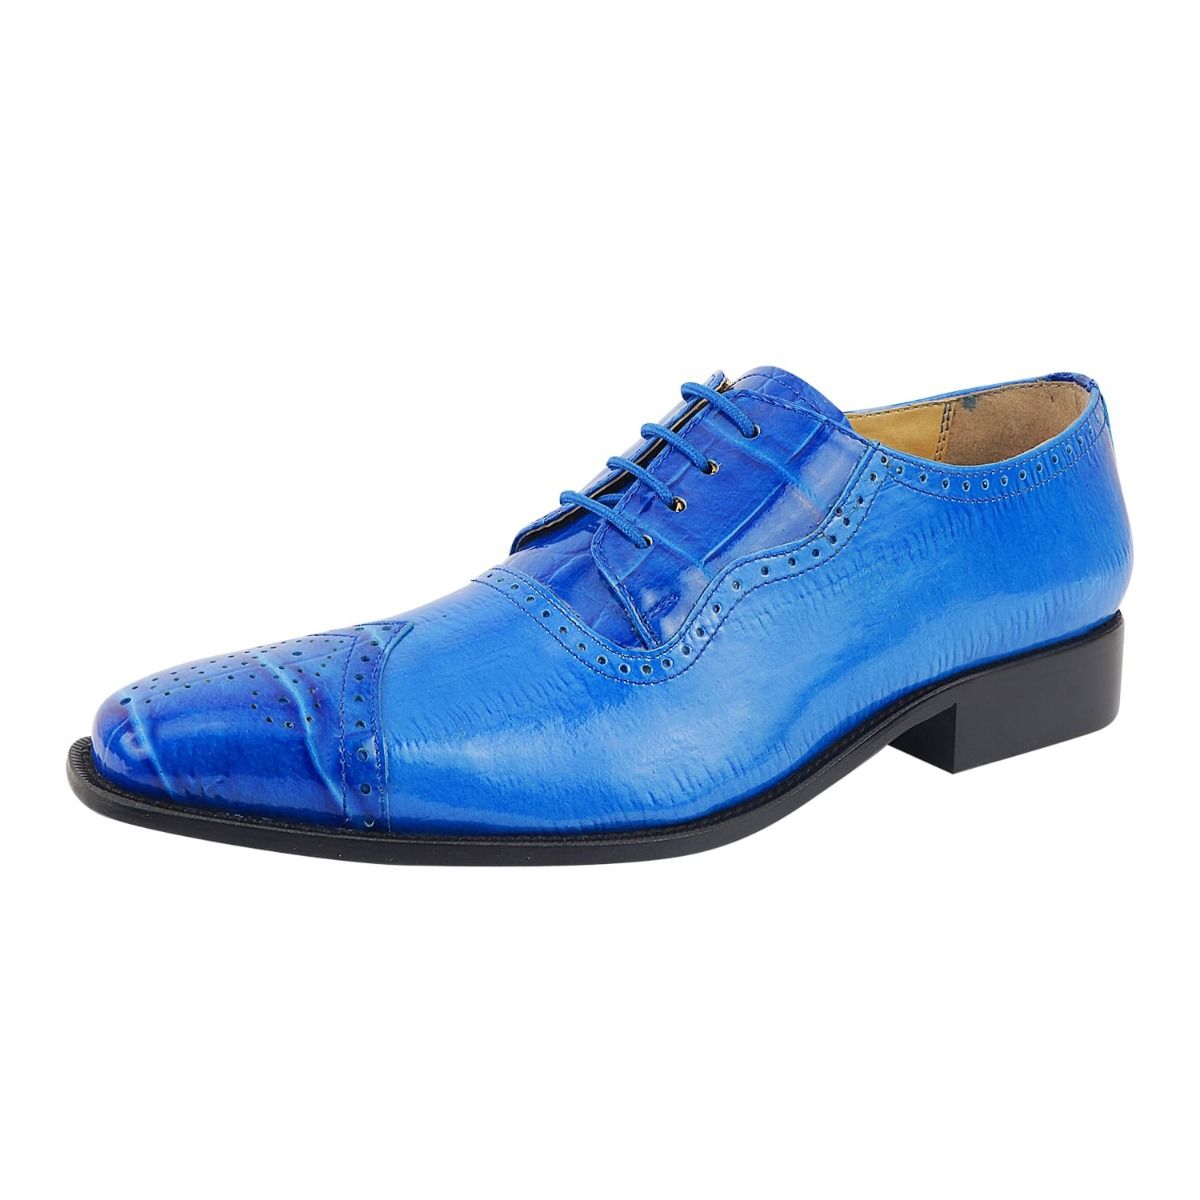 LIBERTYZENO Mens Oxford Dress Shoes Hornback Print Male - image 1 of 7